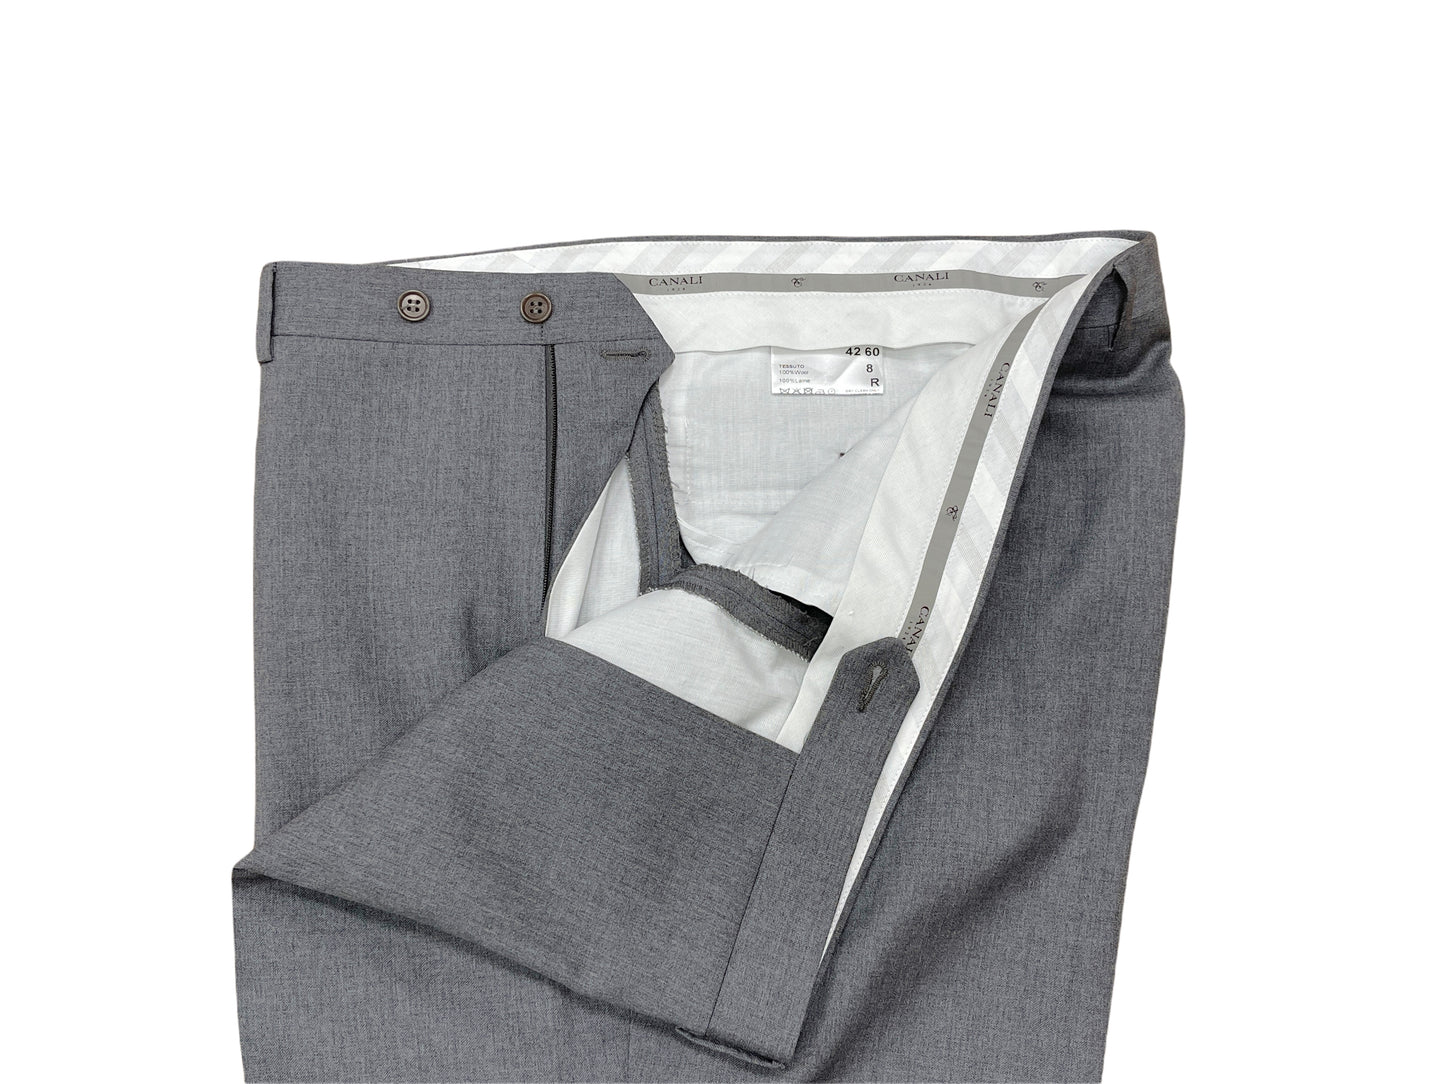 Canali Grey Wool Dress Pant 41 x 33